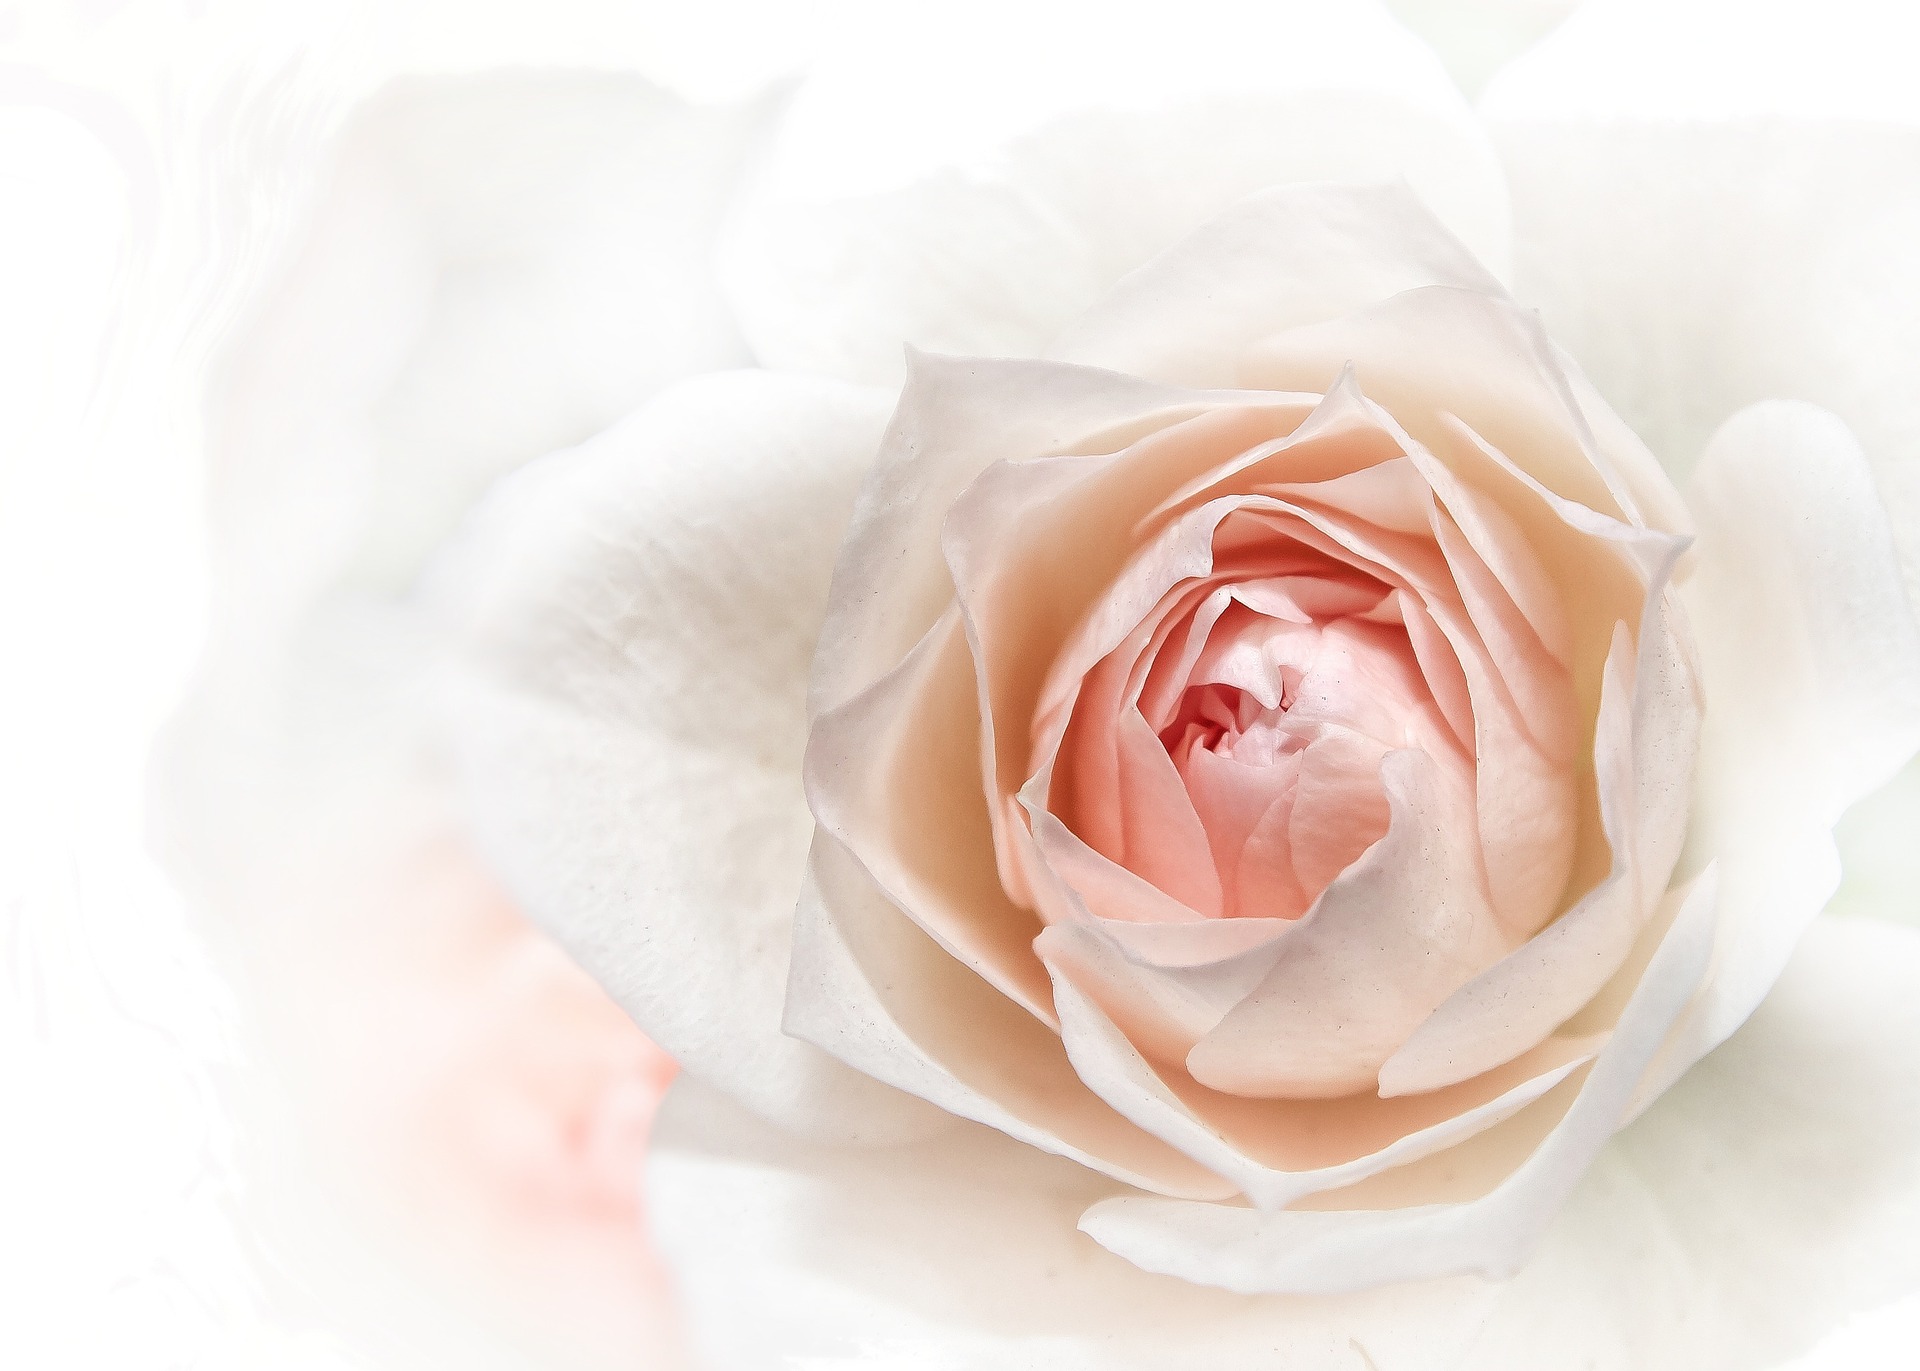 Pale white rose